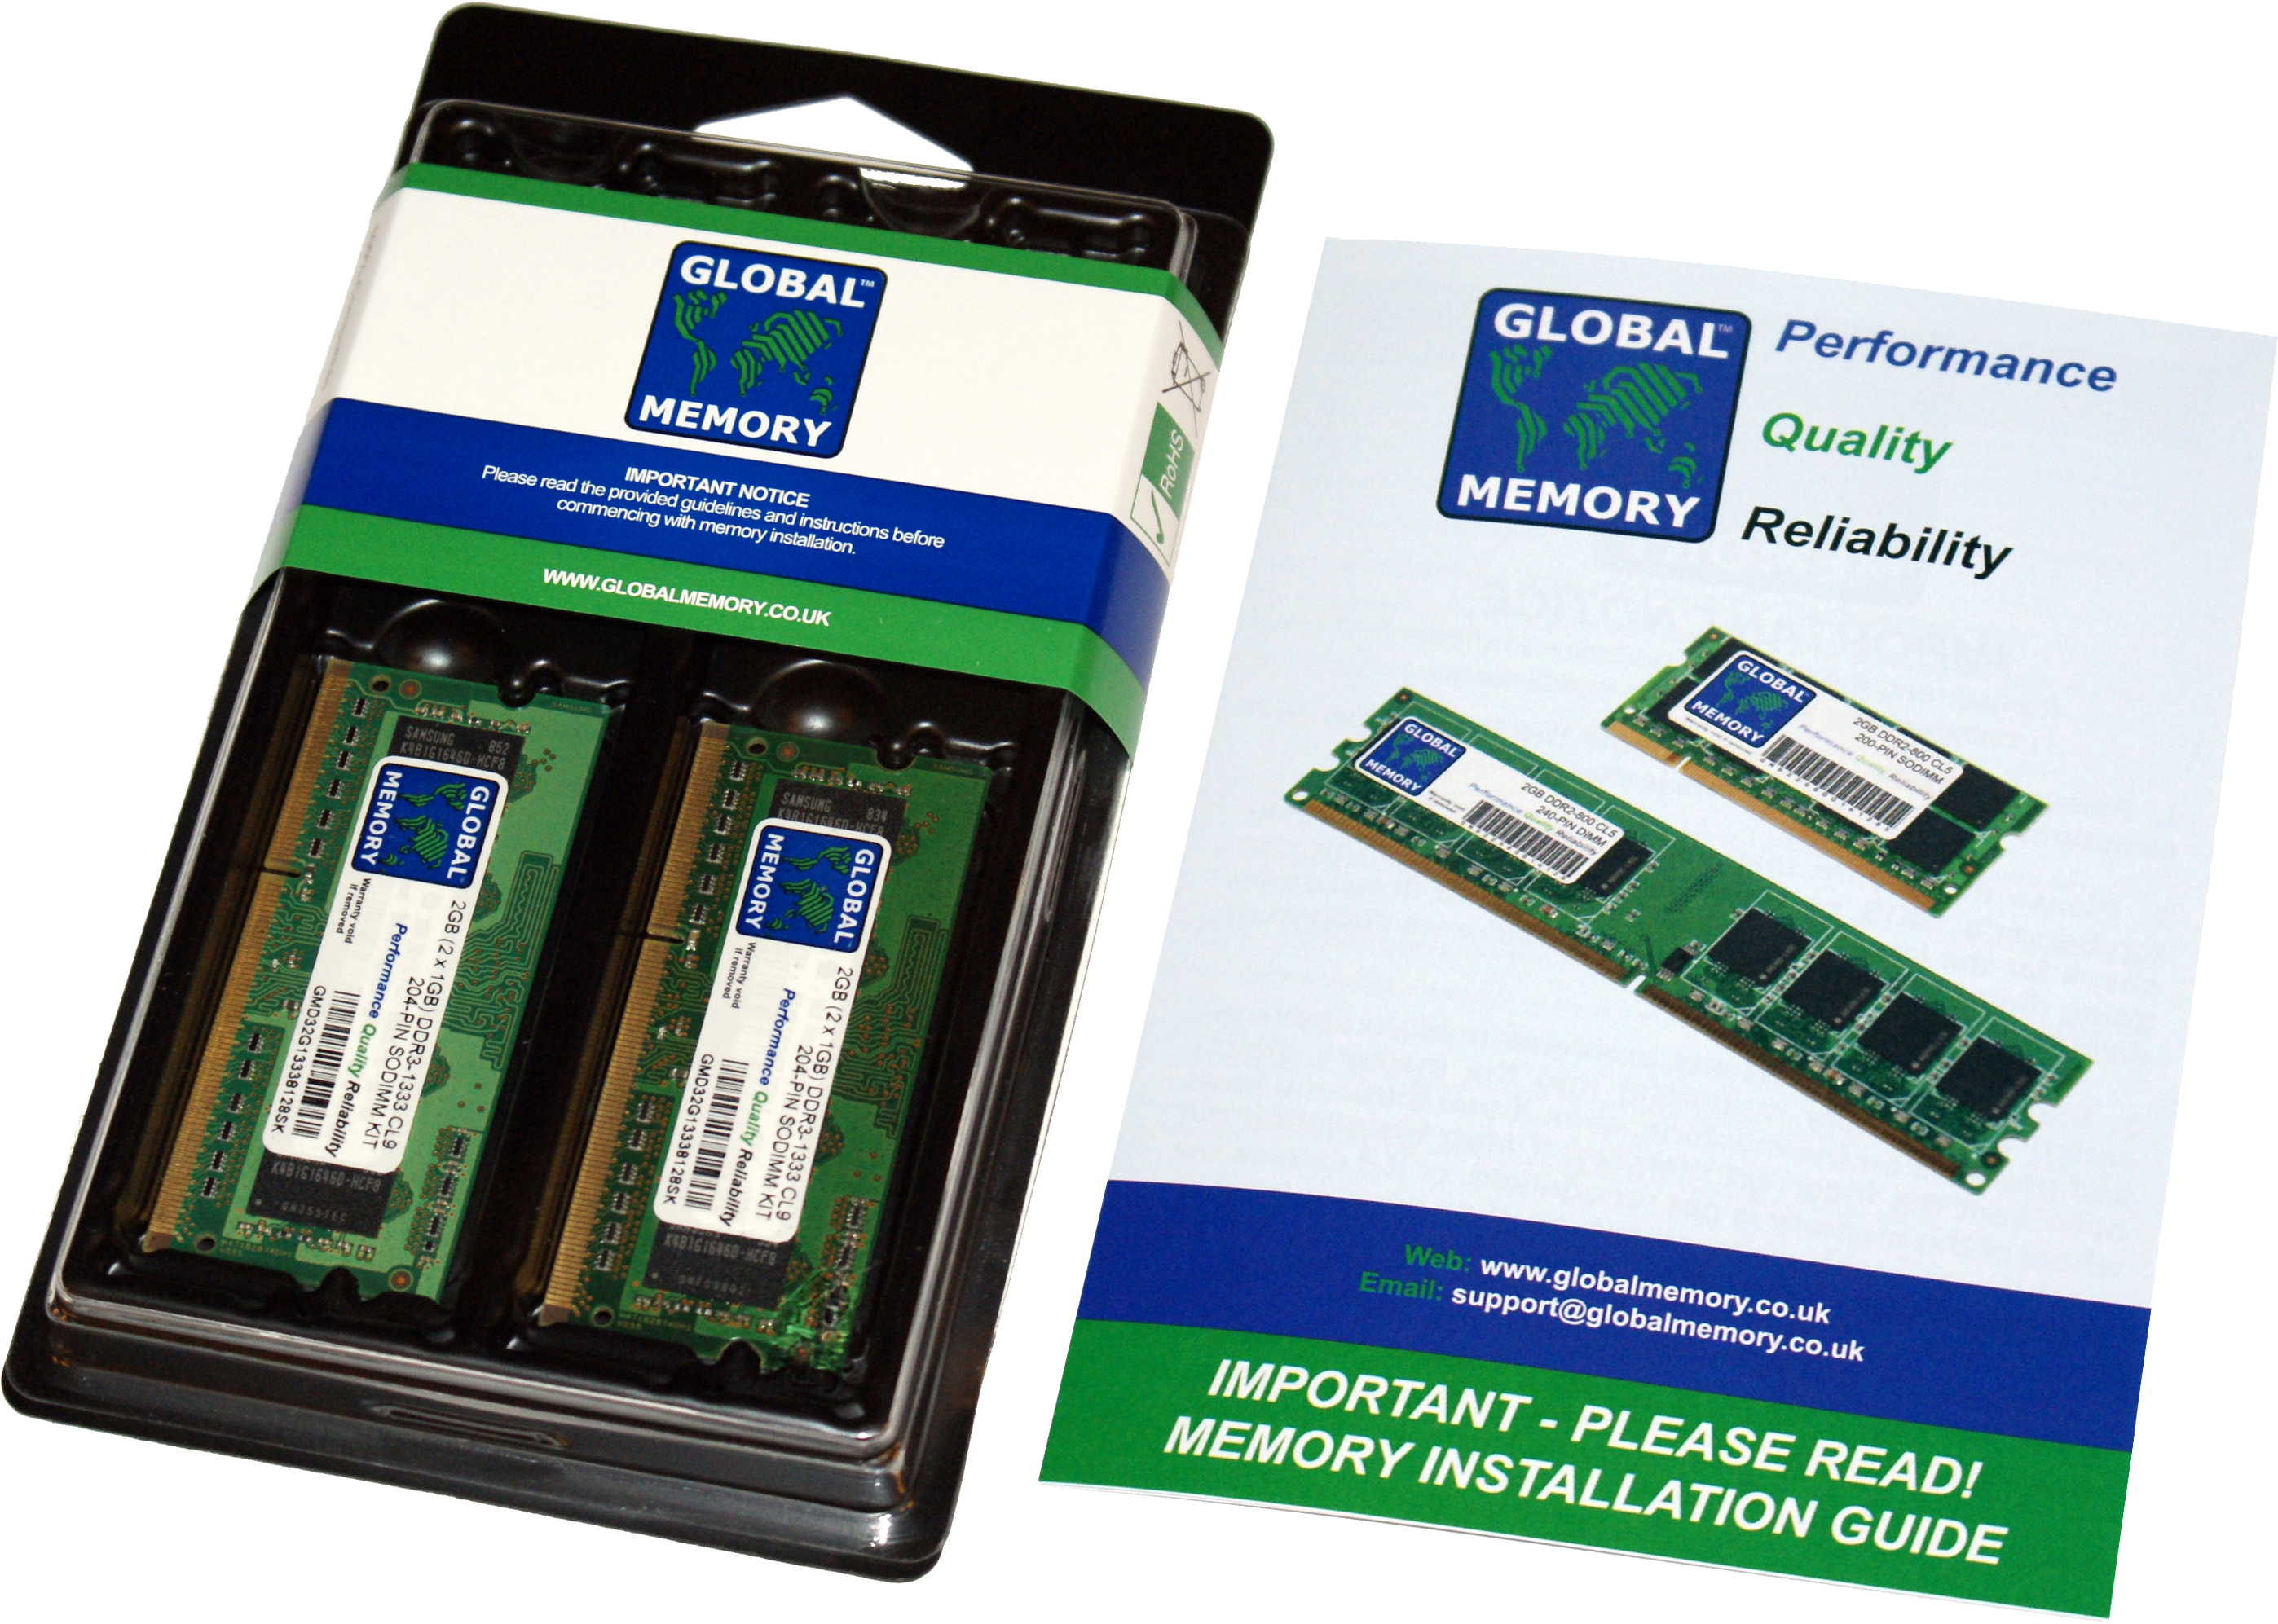 8GB (2 x 4GB) DDR4 2933MHz PC4-23400 260-PIN SODIMM MEMORY RAM KIT FOR LAPTOPS/NOTEBOOKS